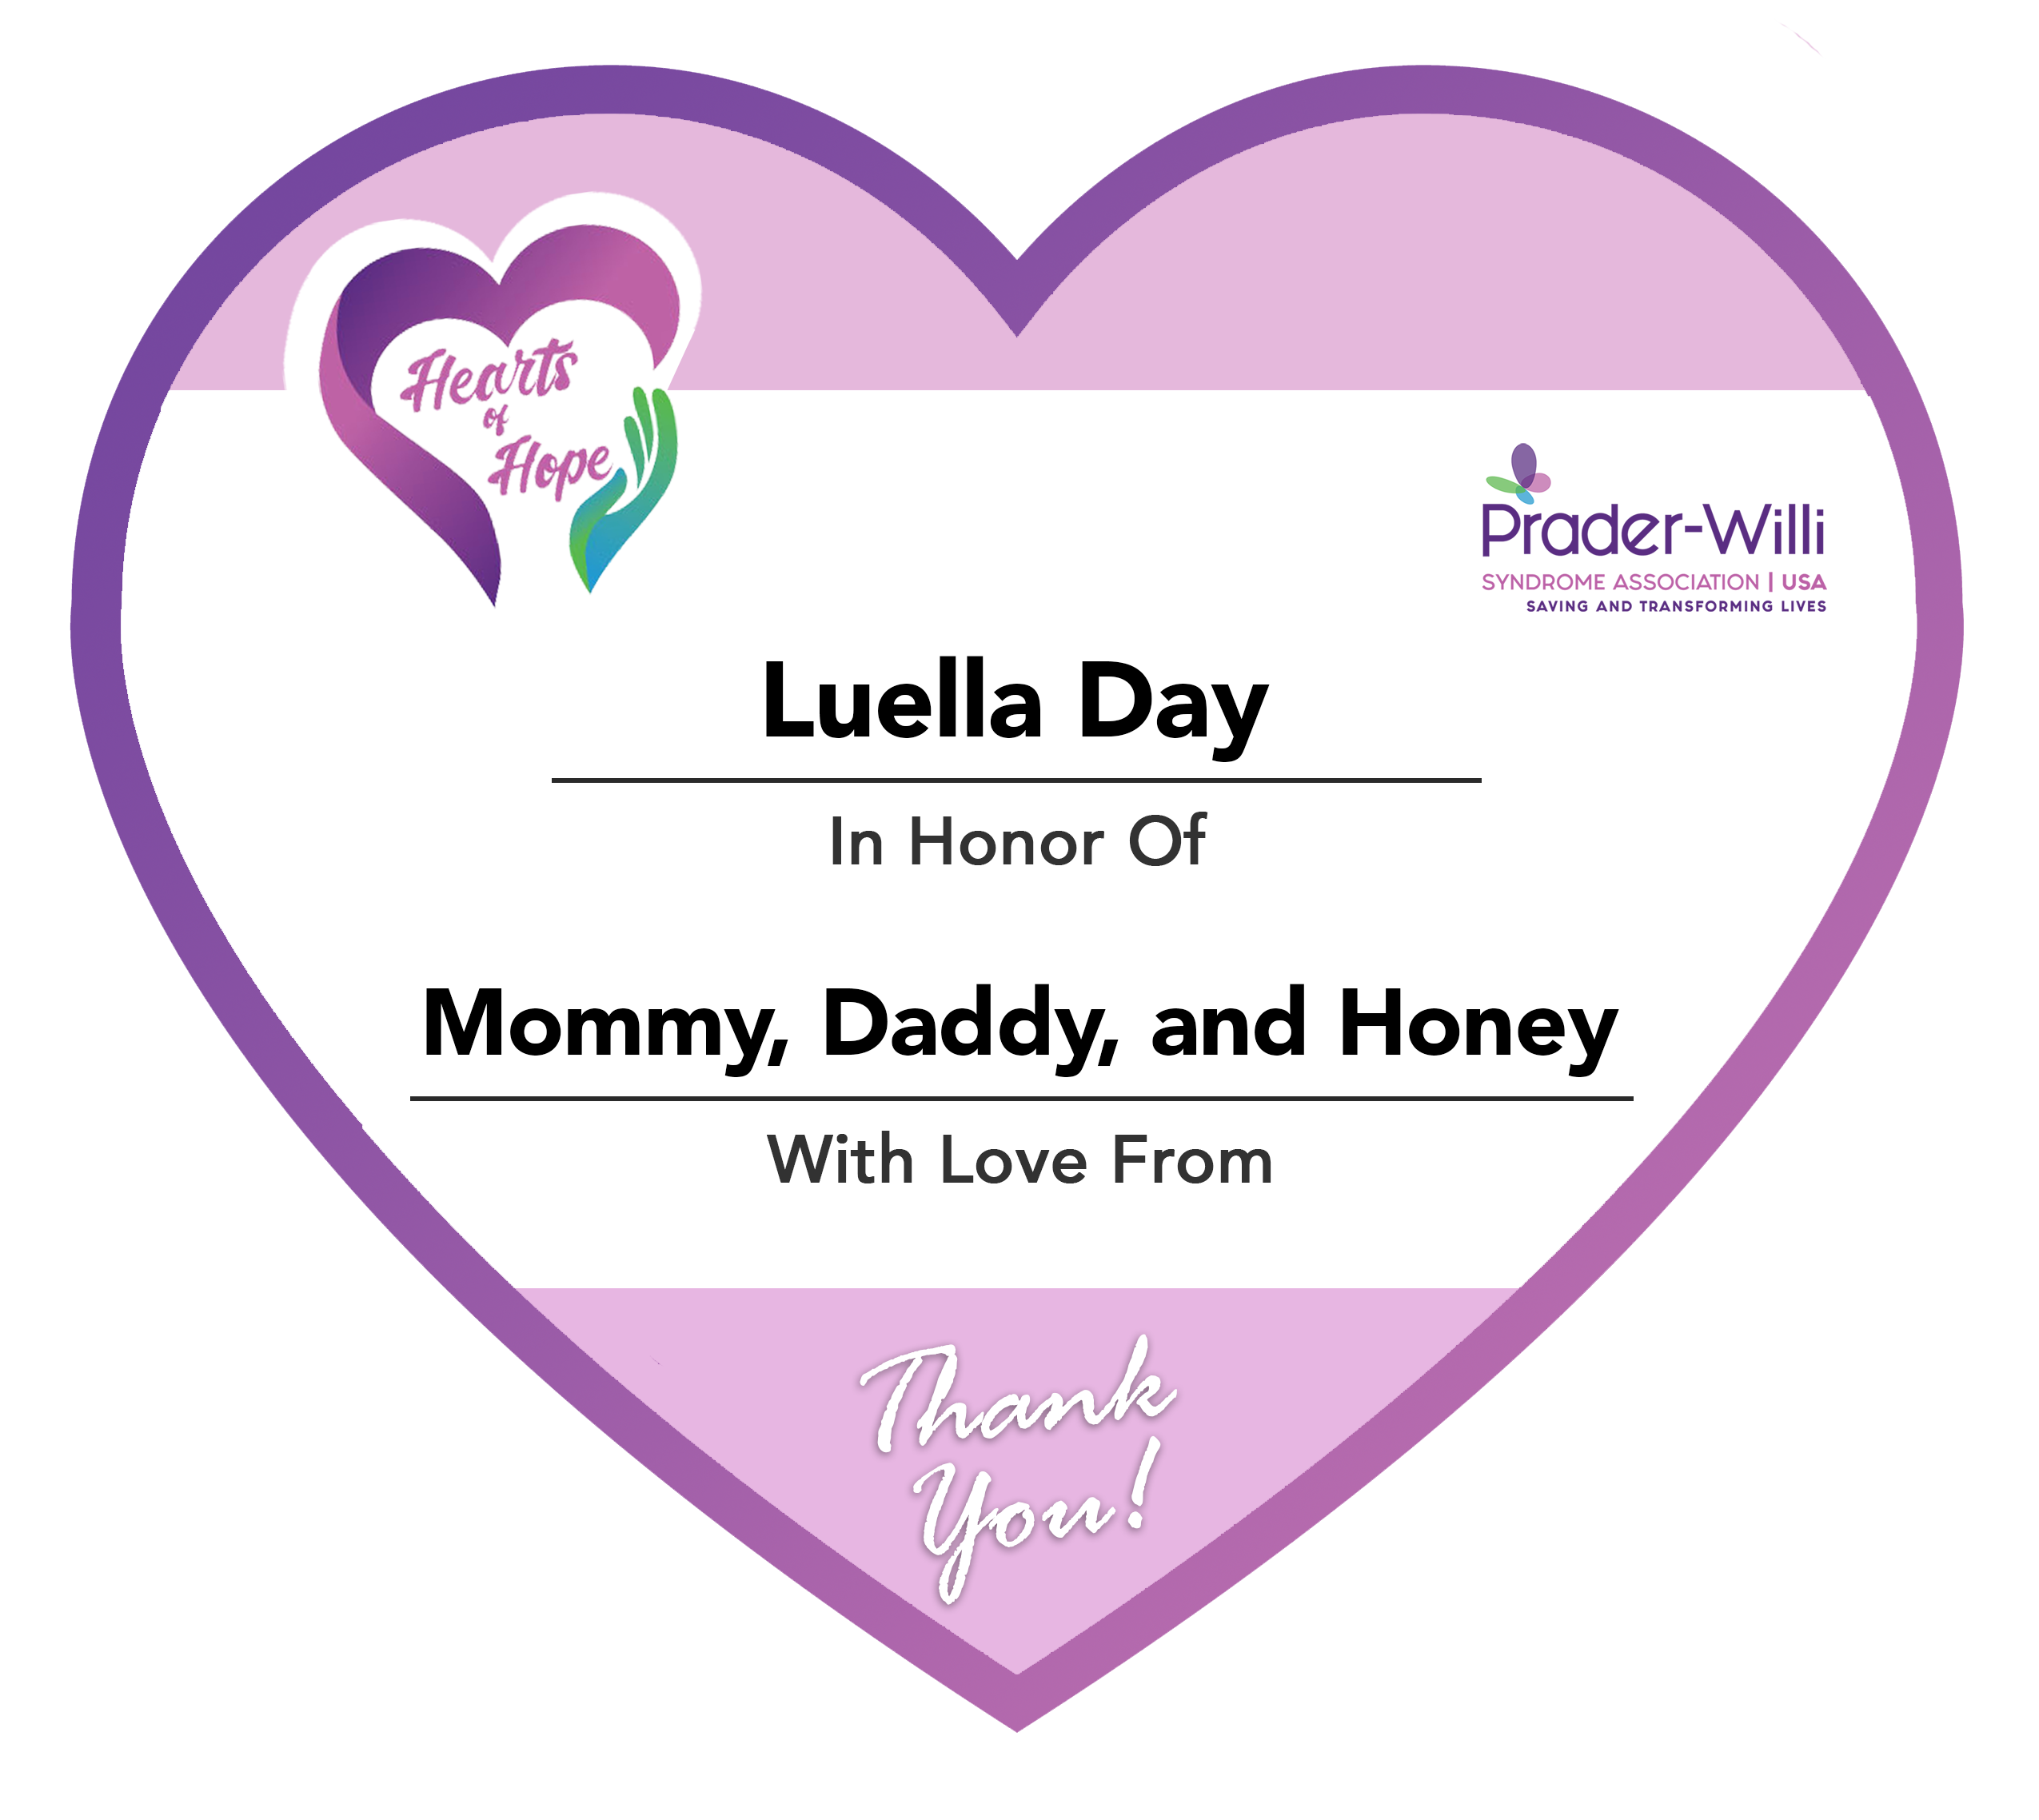 PWSA Paperheart LuellaDay, Prader-Willi Syndrome Association | USA